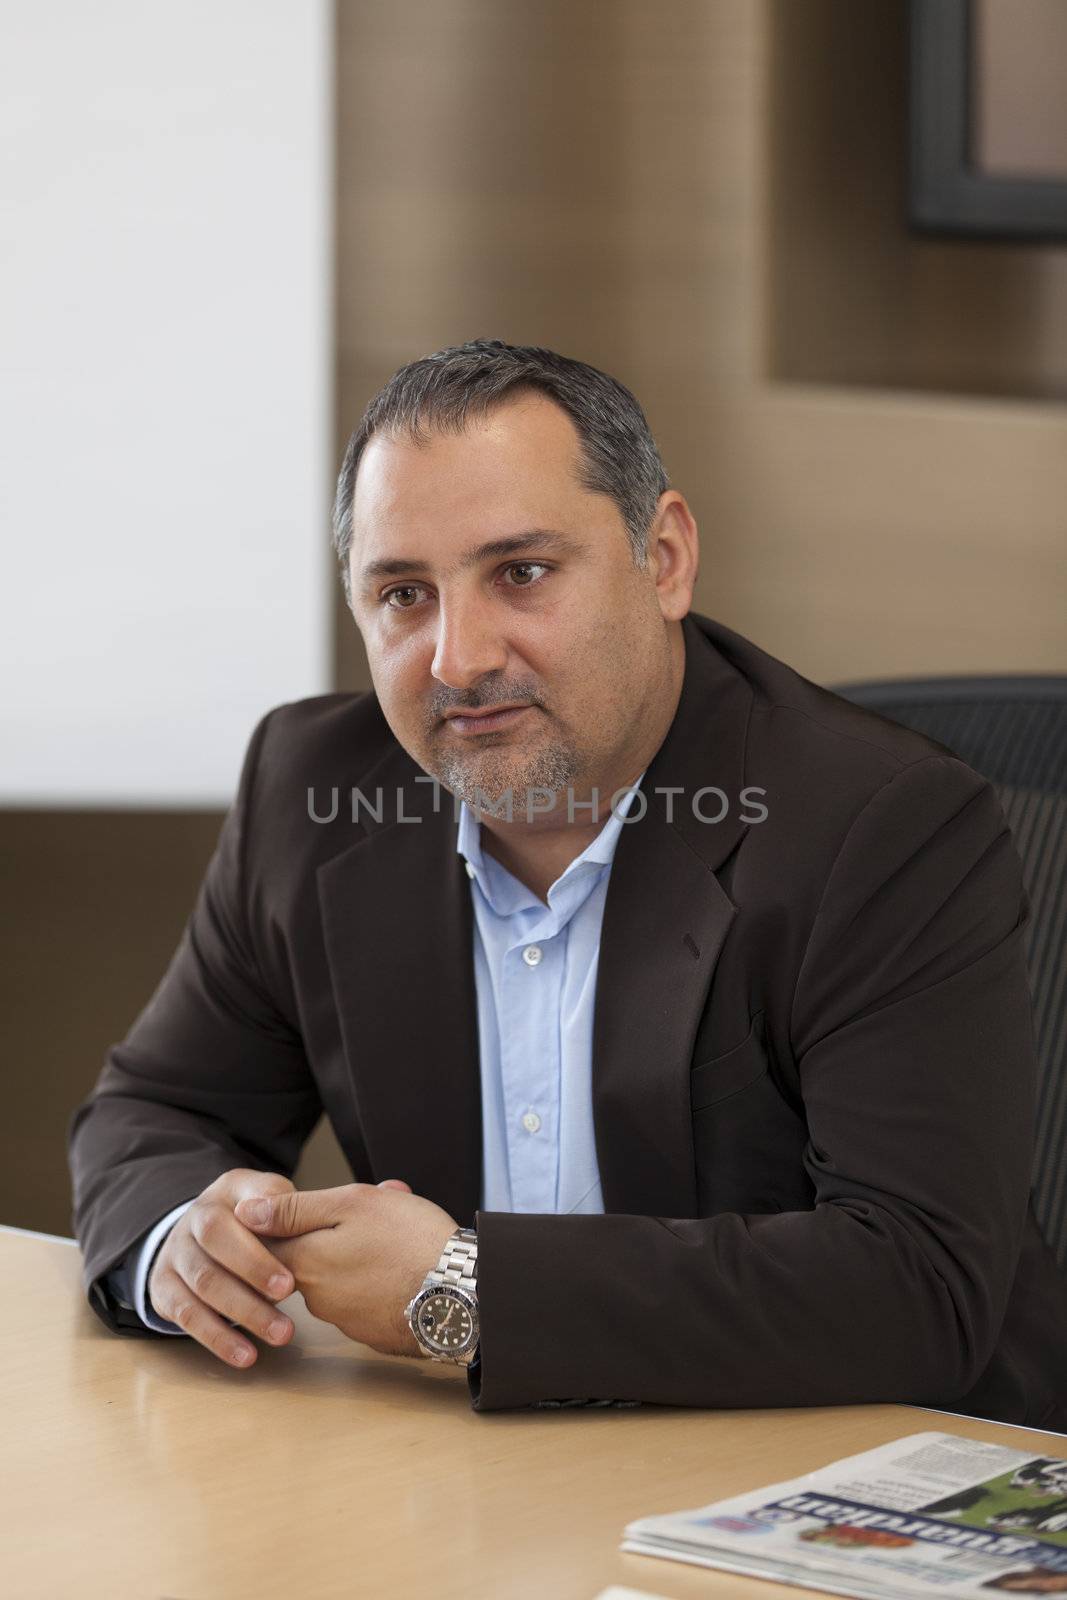 Smart City Malta CEO by PhotoWorks